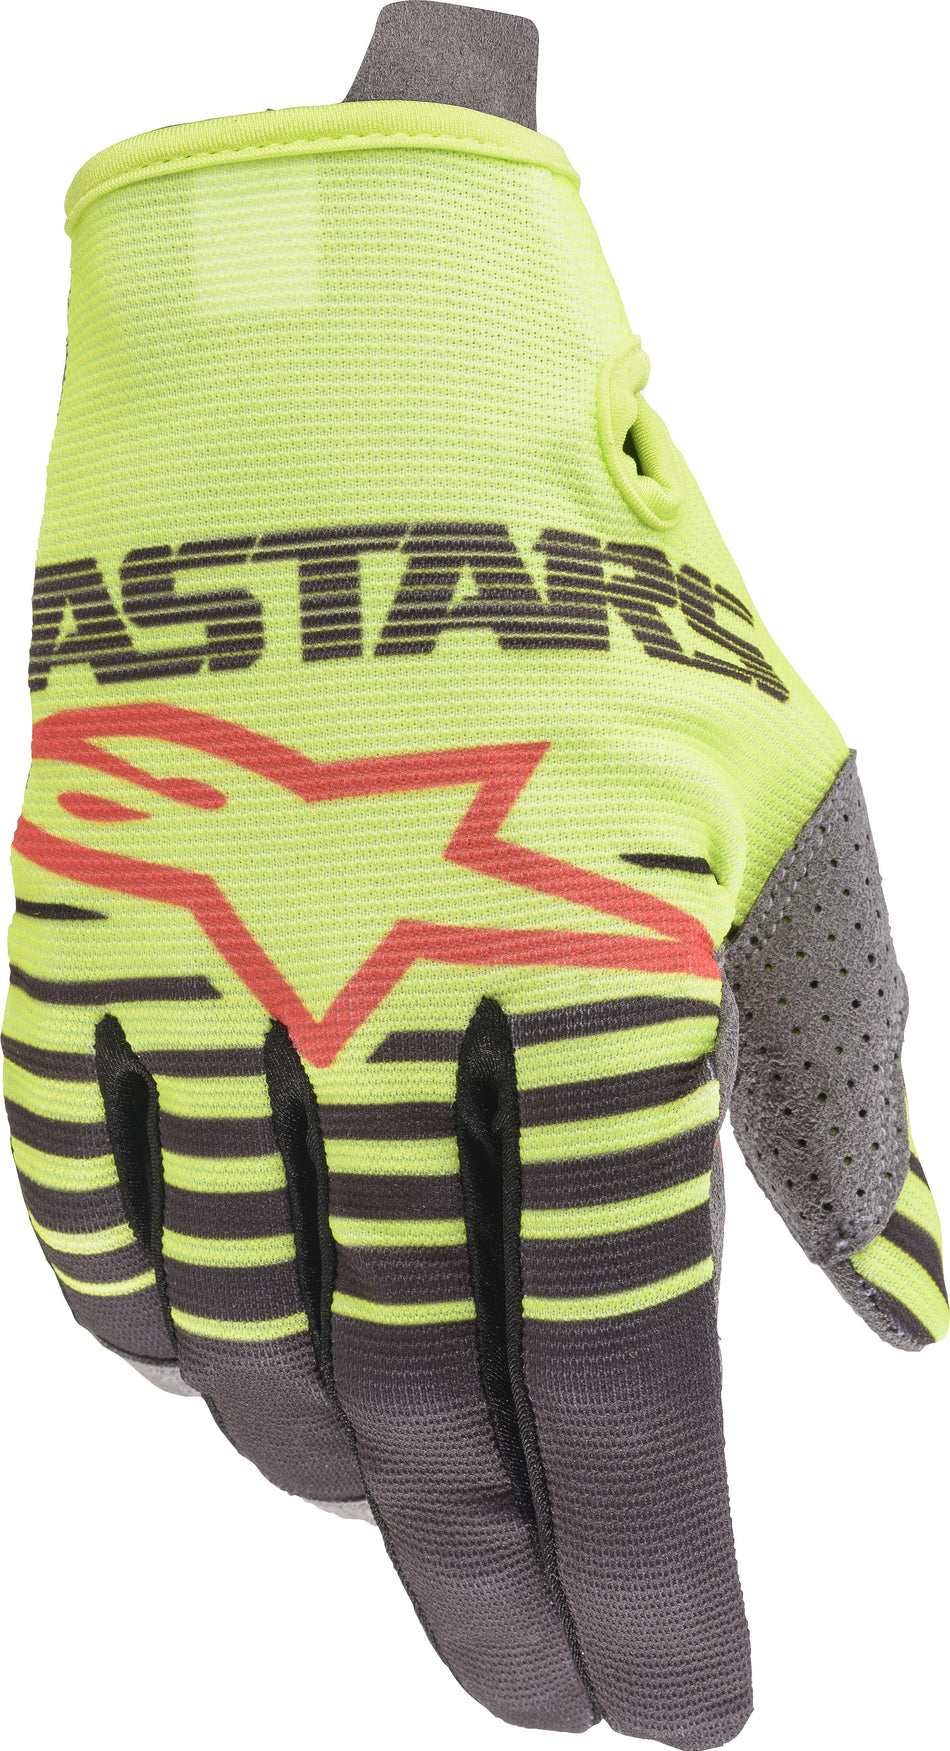 ALPINESTARS Radar Gloves Yellow/Anthracite Lg 3561820-559-L